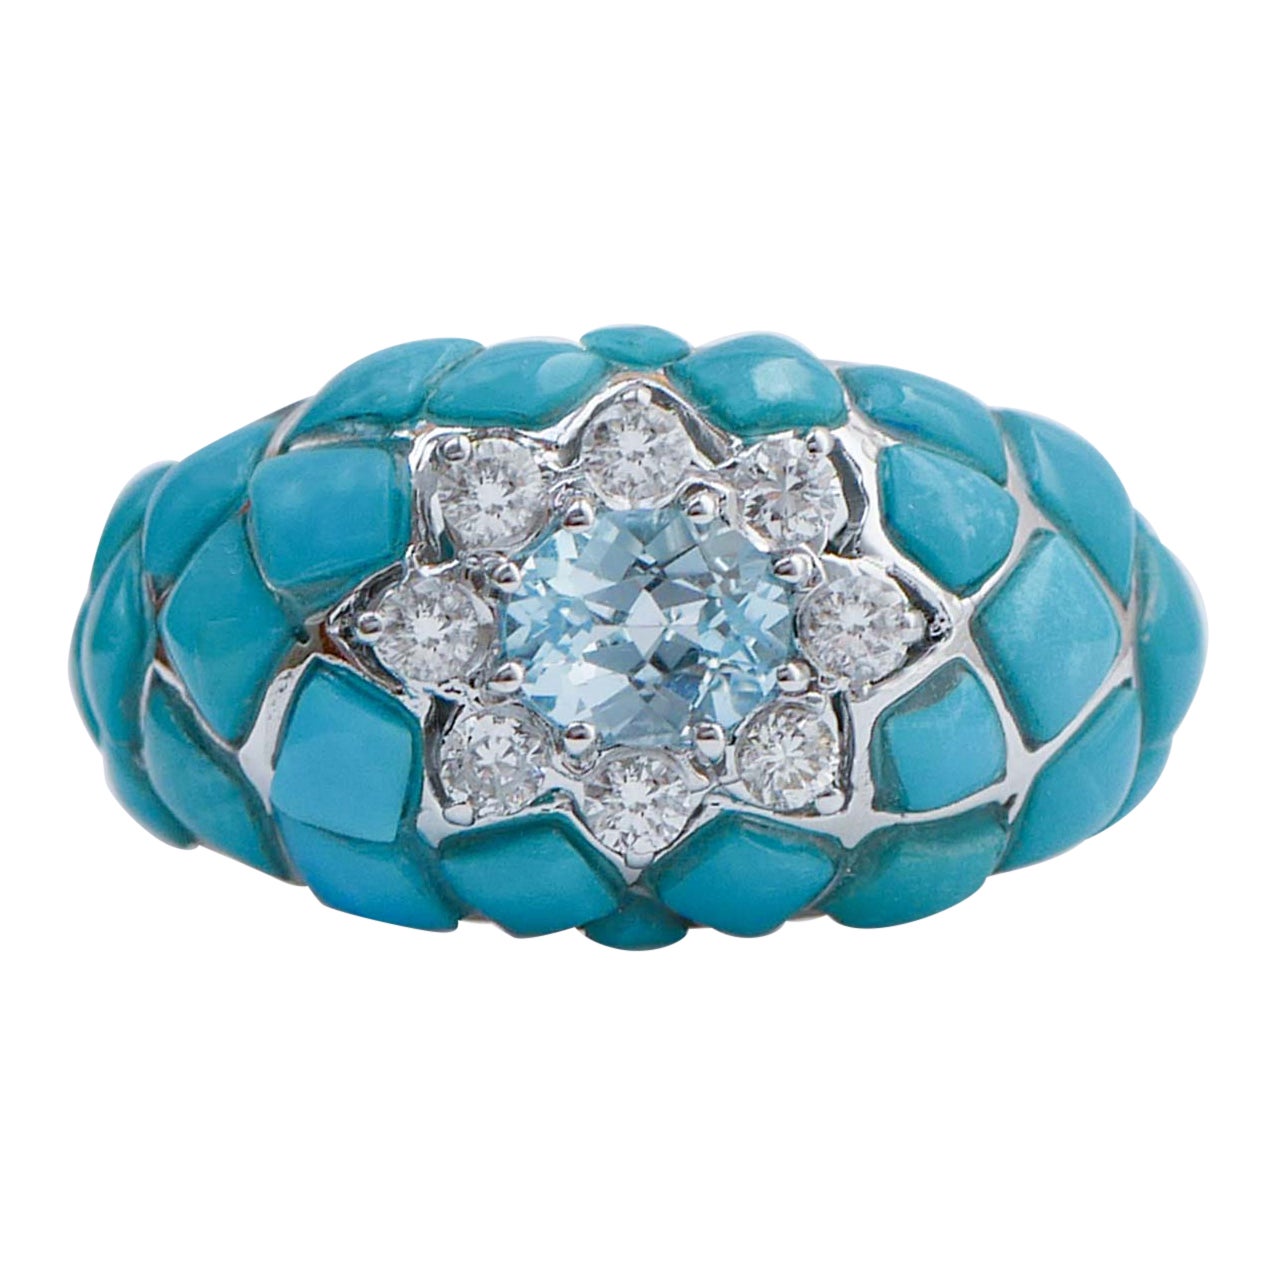 Aquamarine Colour Topaz, Diamonds, Turquoise, 18 Karat White Gold Ring. For Sale